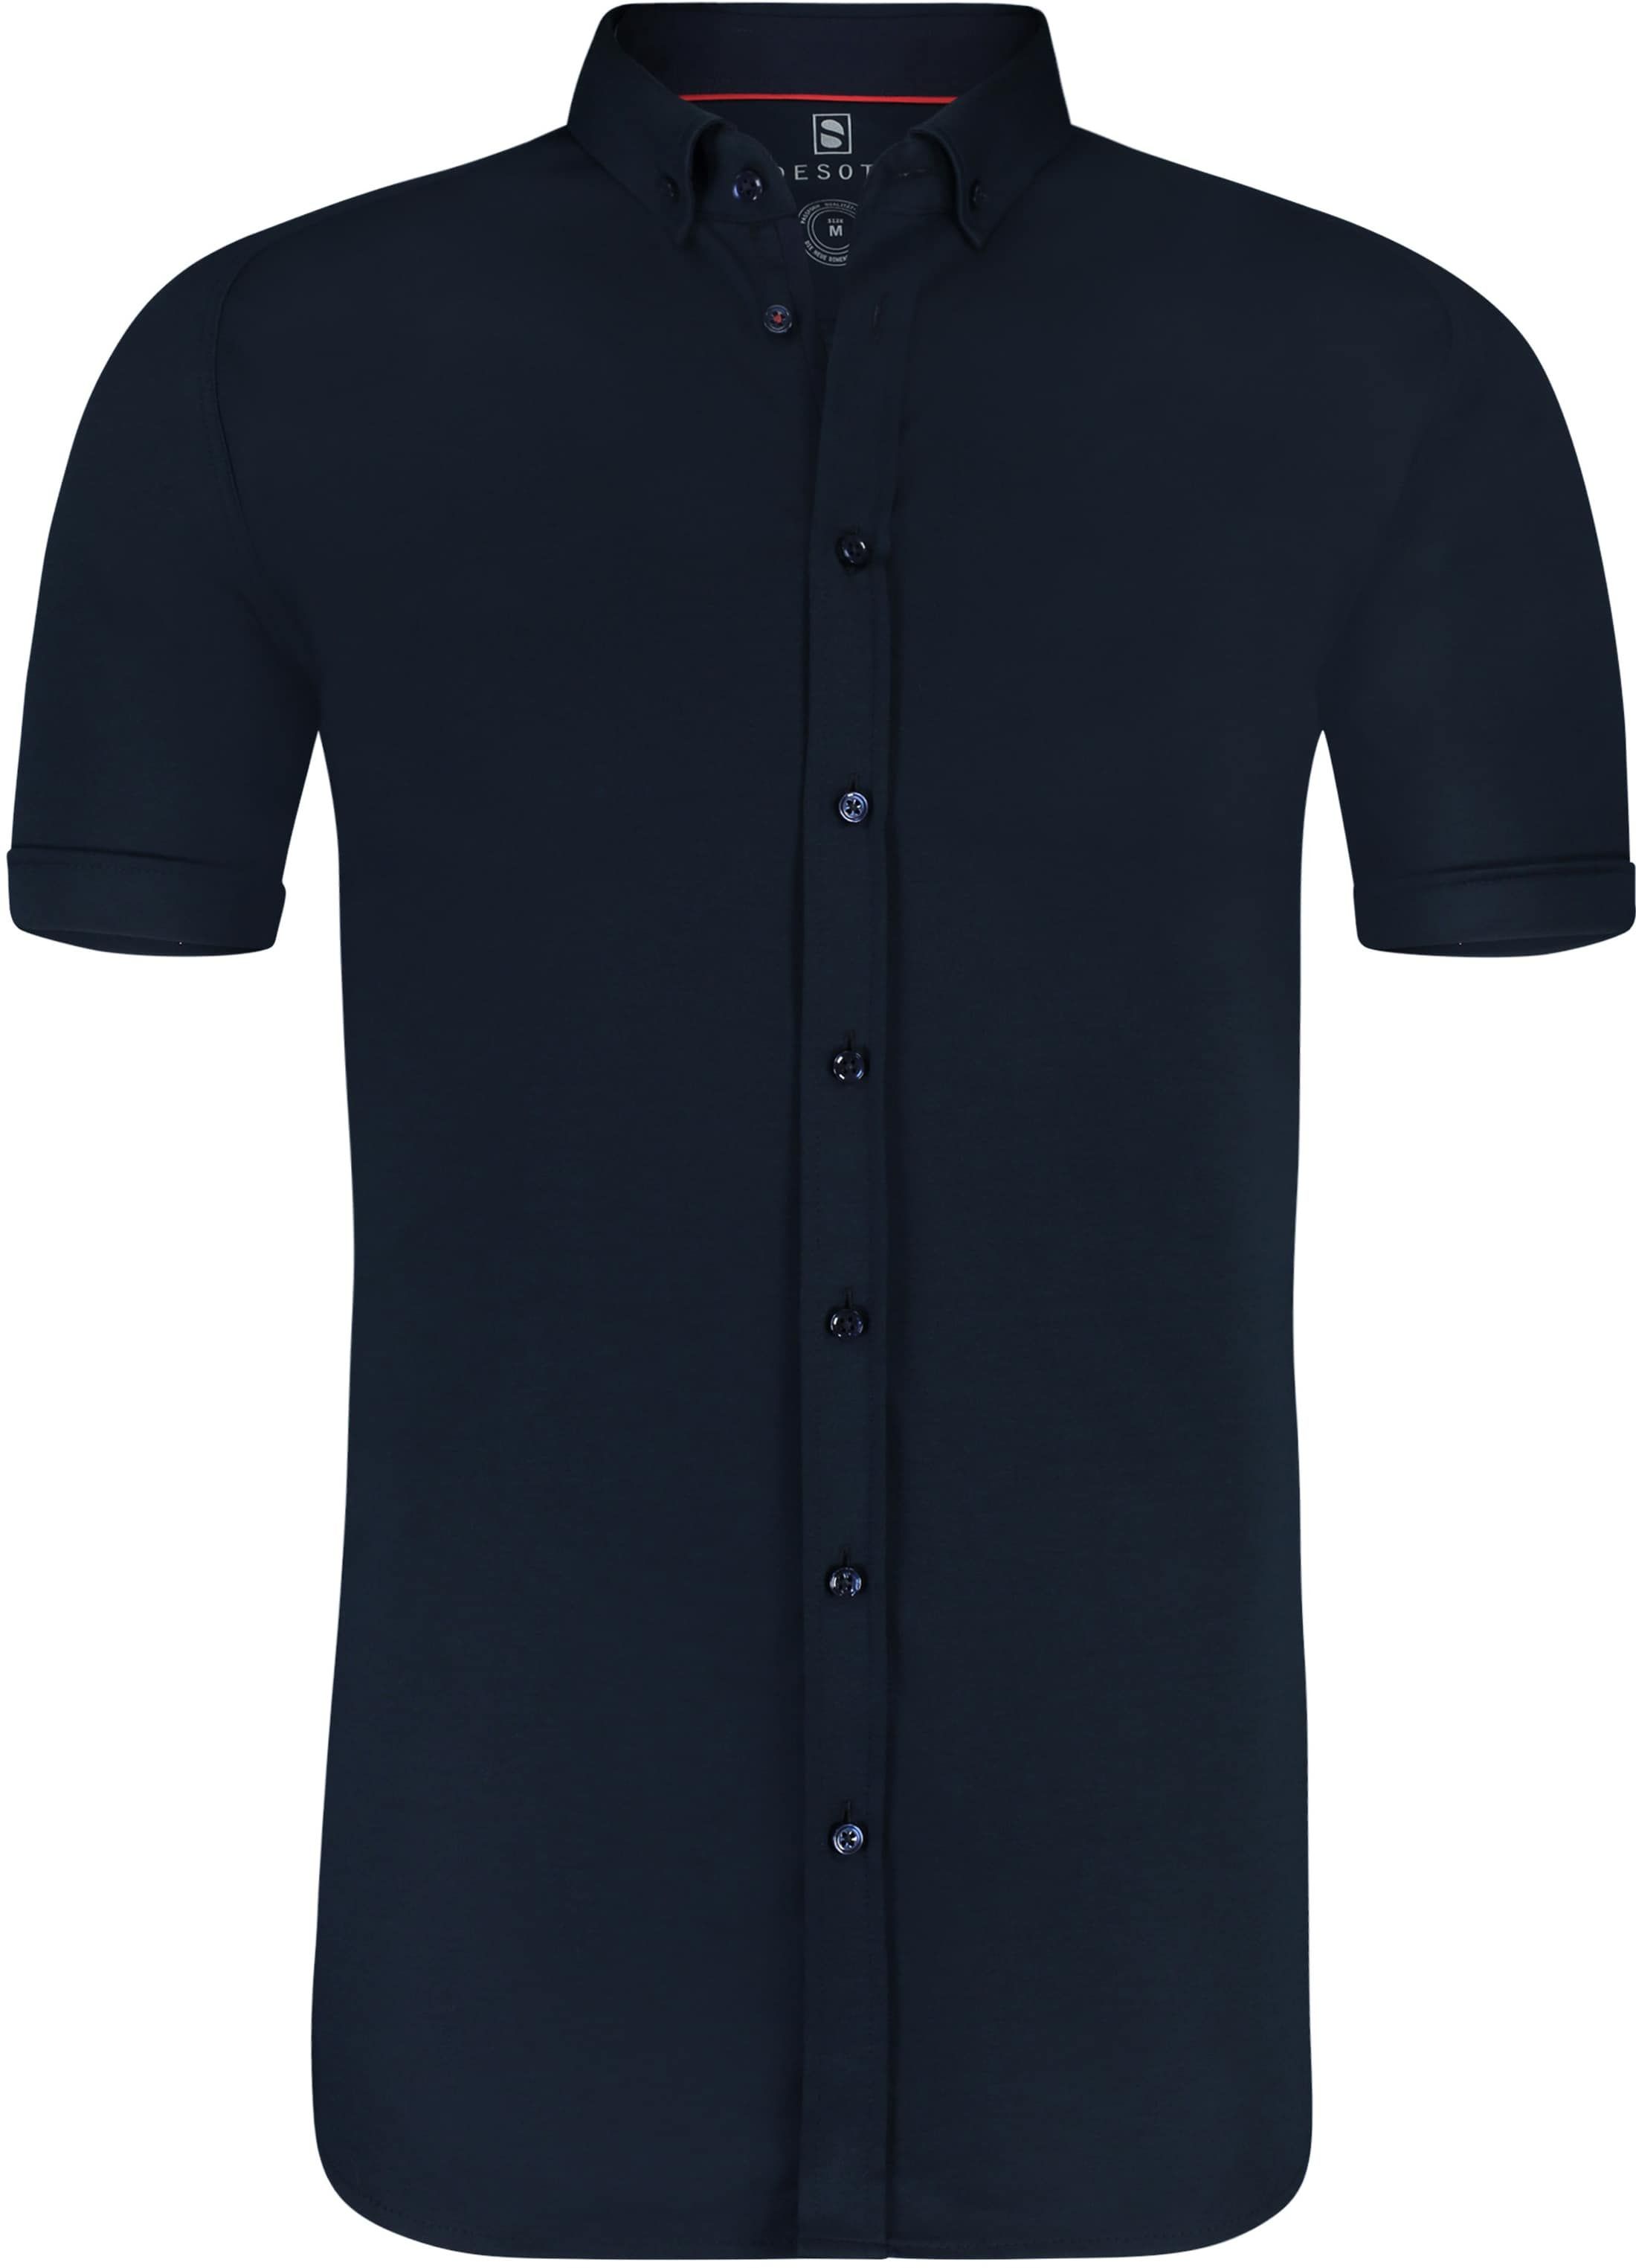 Desoto Shirt Short Sleeve Navy 057 Dark Blue Blue size XL